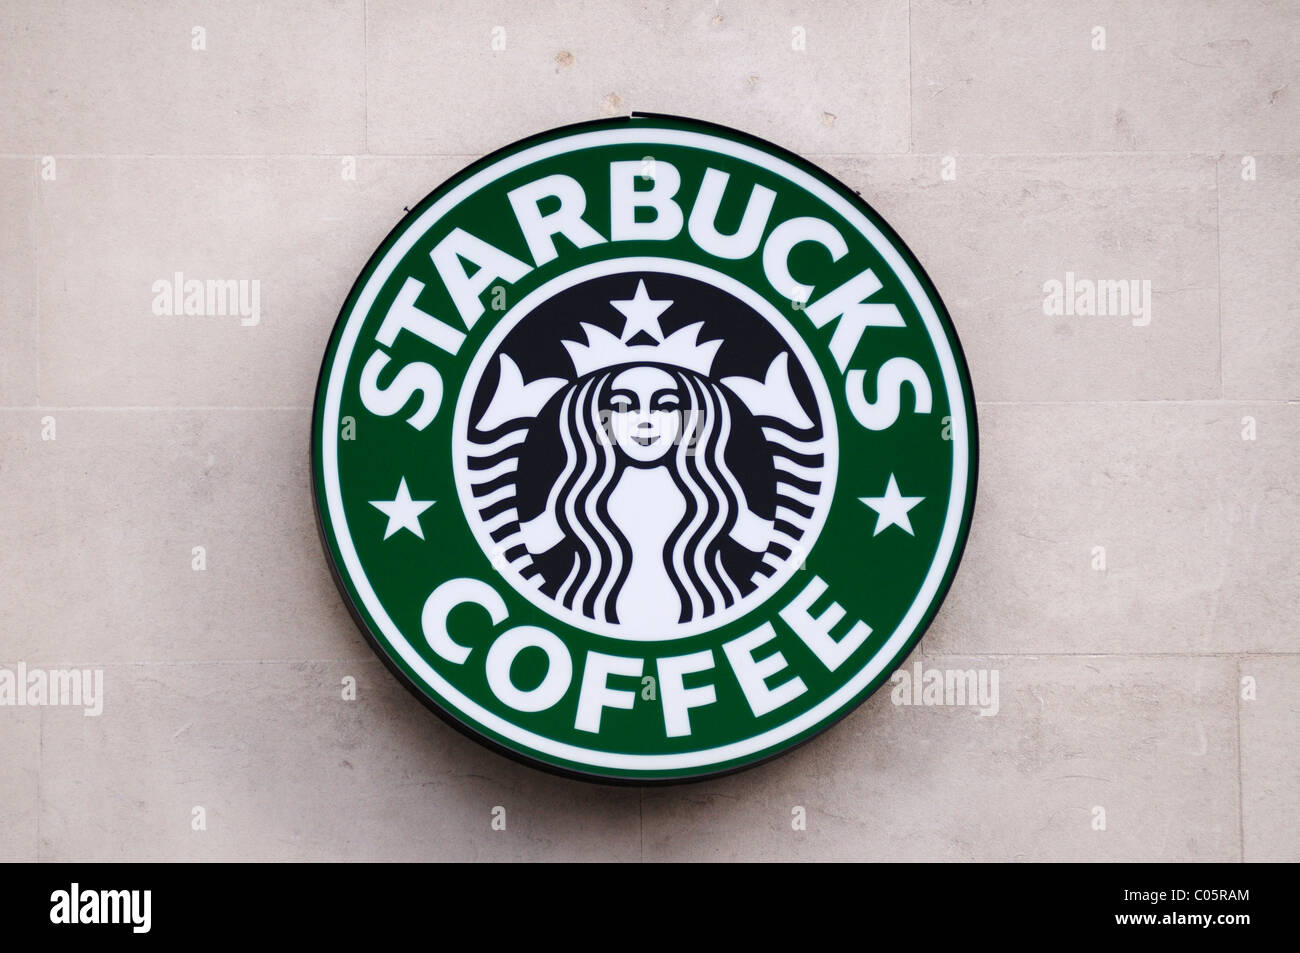 Starbucks Coffee symbol logo, London, England, Uk Stock Photo